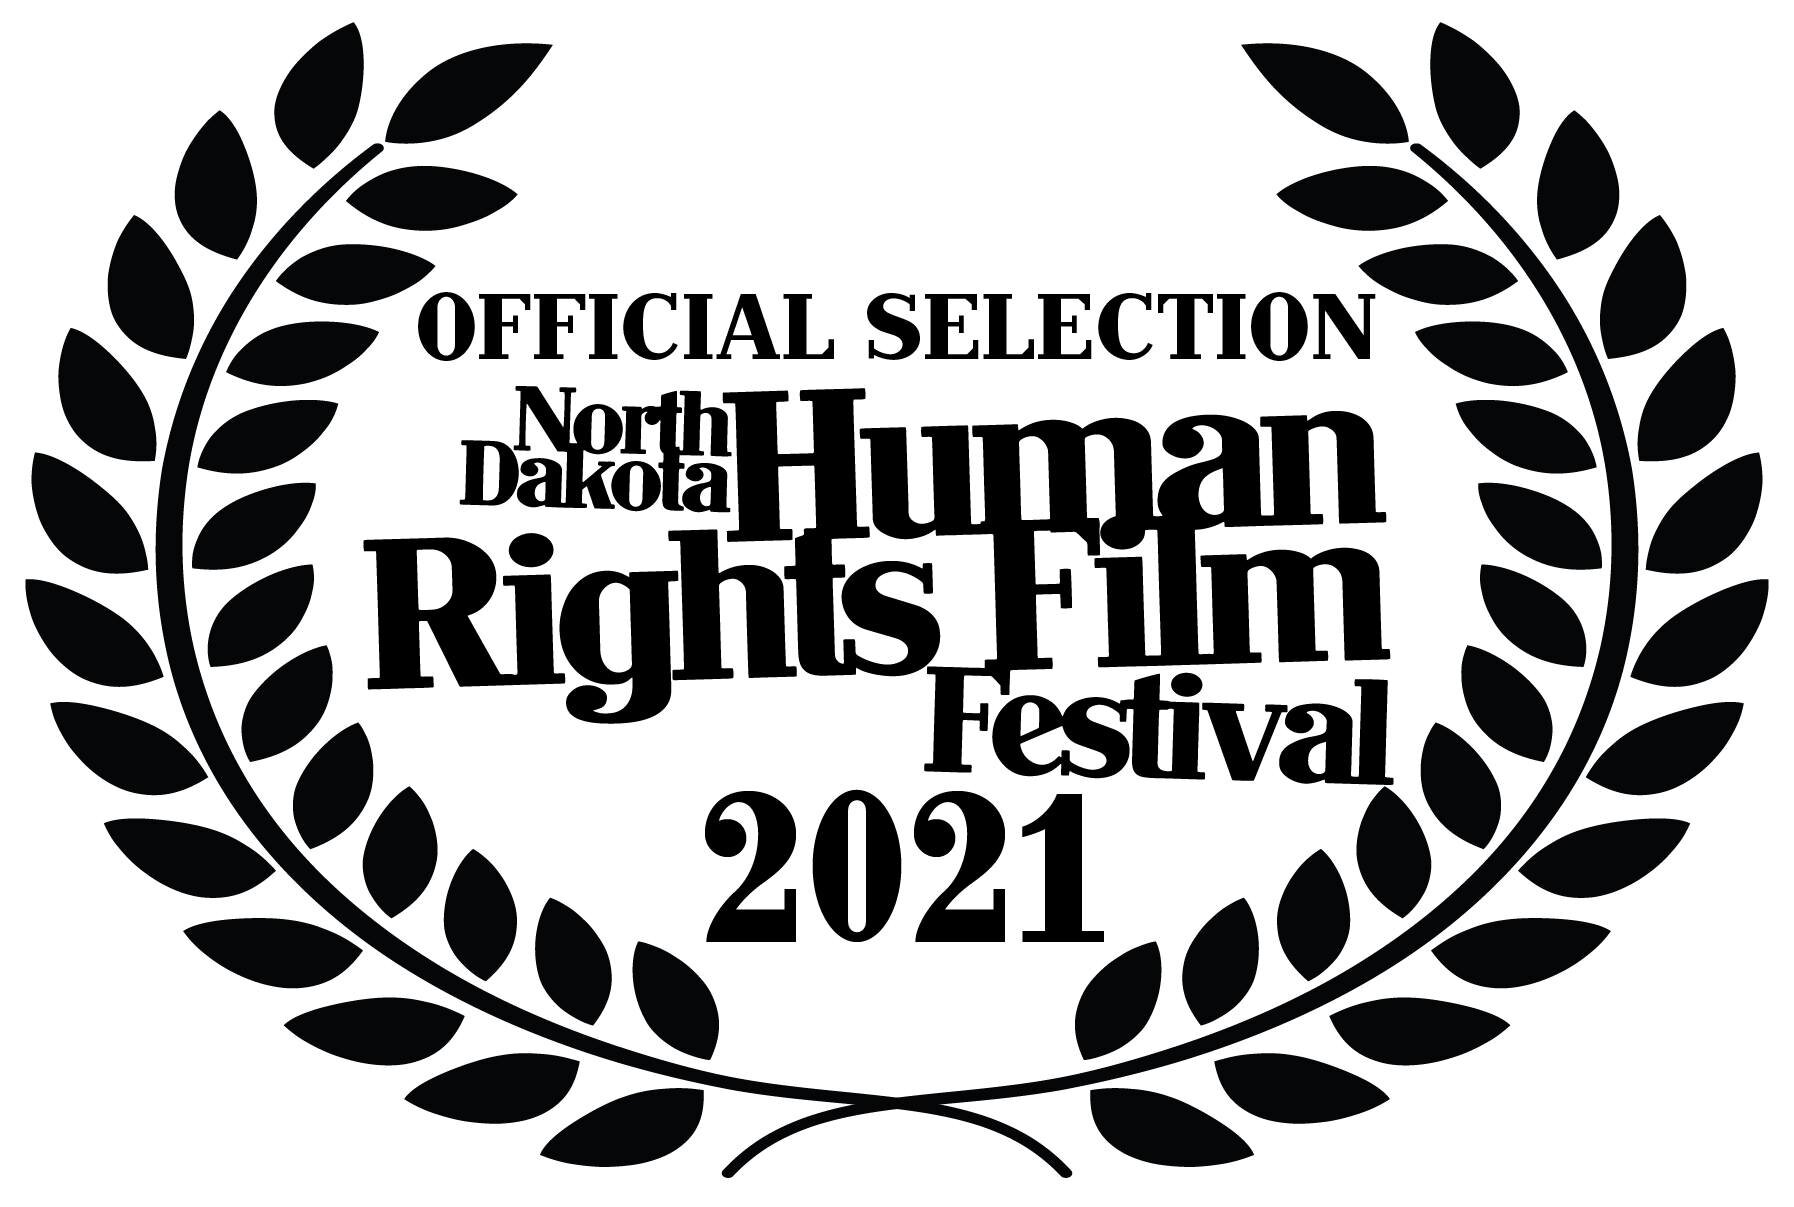 2021 North Dakota Human Rights Film Festival.jpg